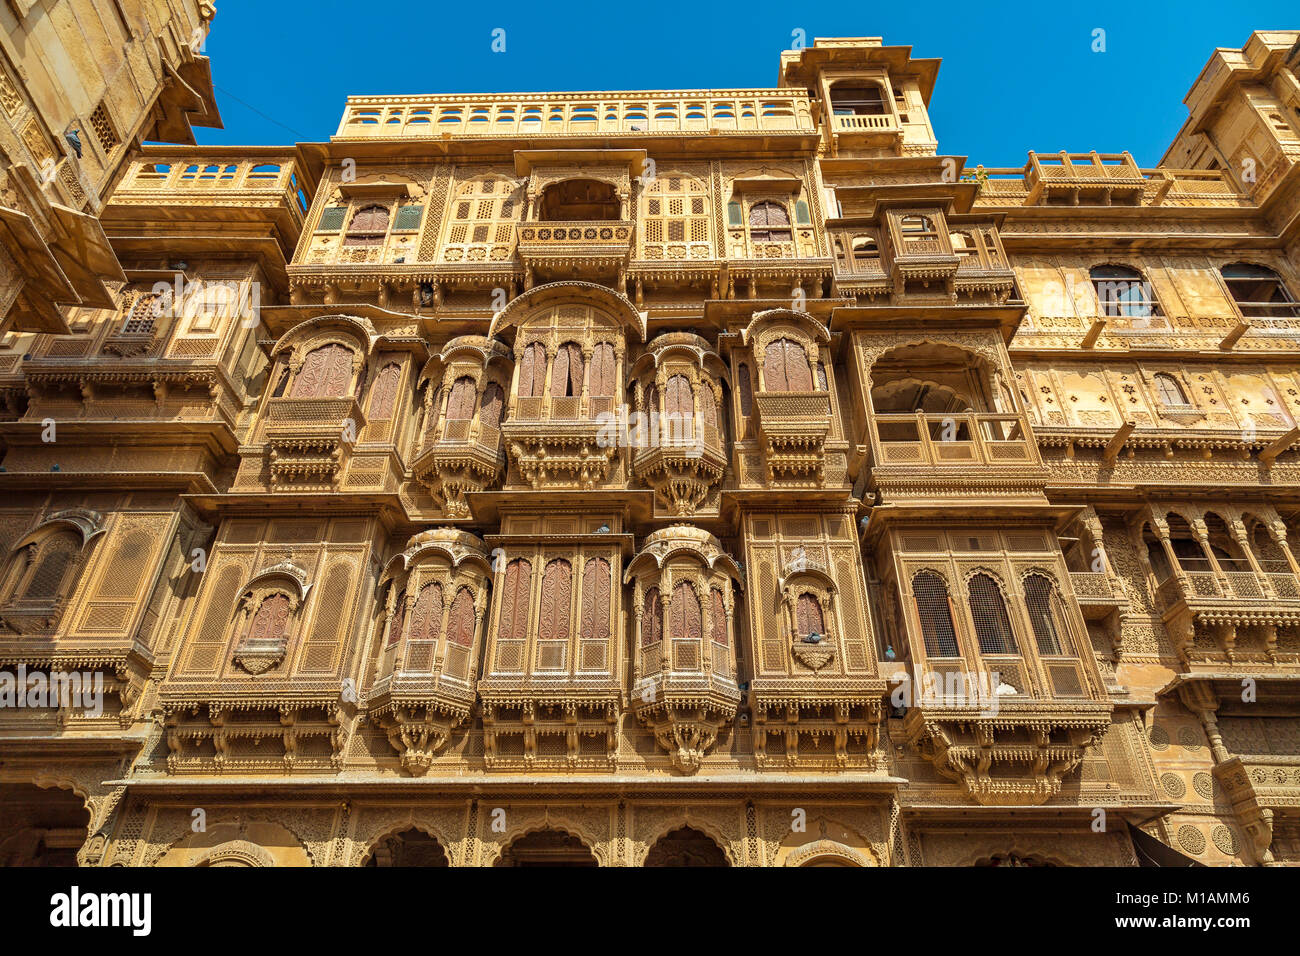 Rajasthan Architektur Royal Palace Gebäude - Patwon ki Haveli. Eine beliebte Touristenattraktion bei Jaisalmer. Stockfoto